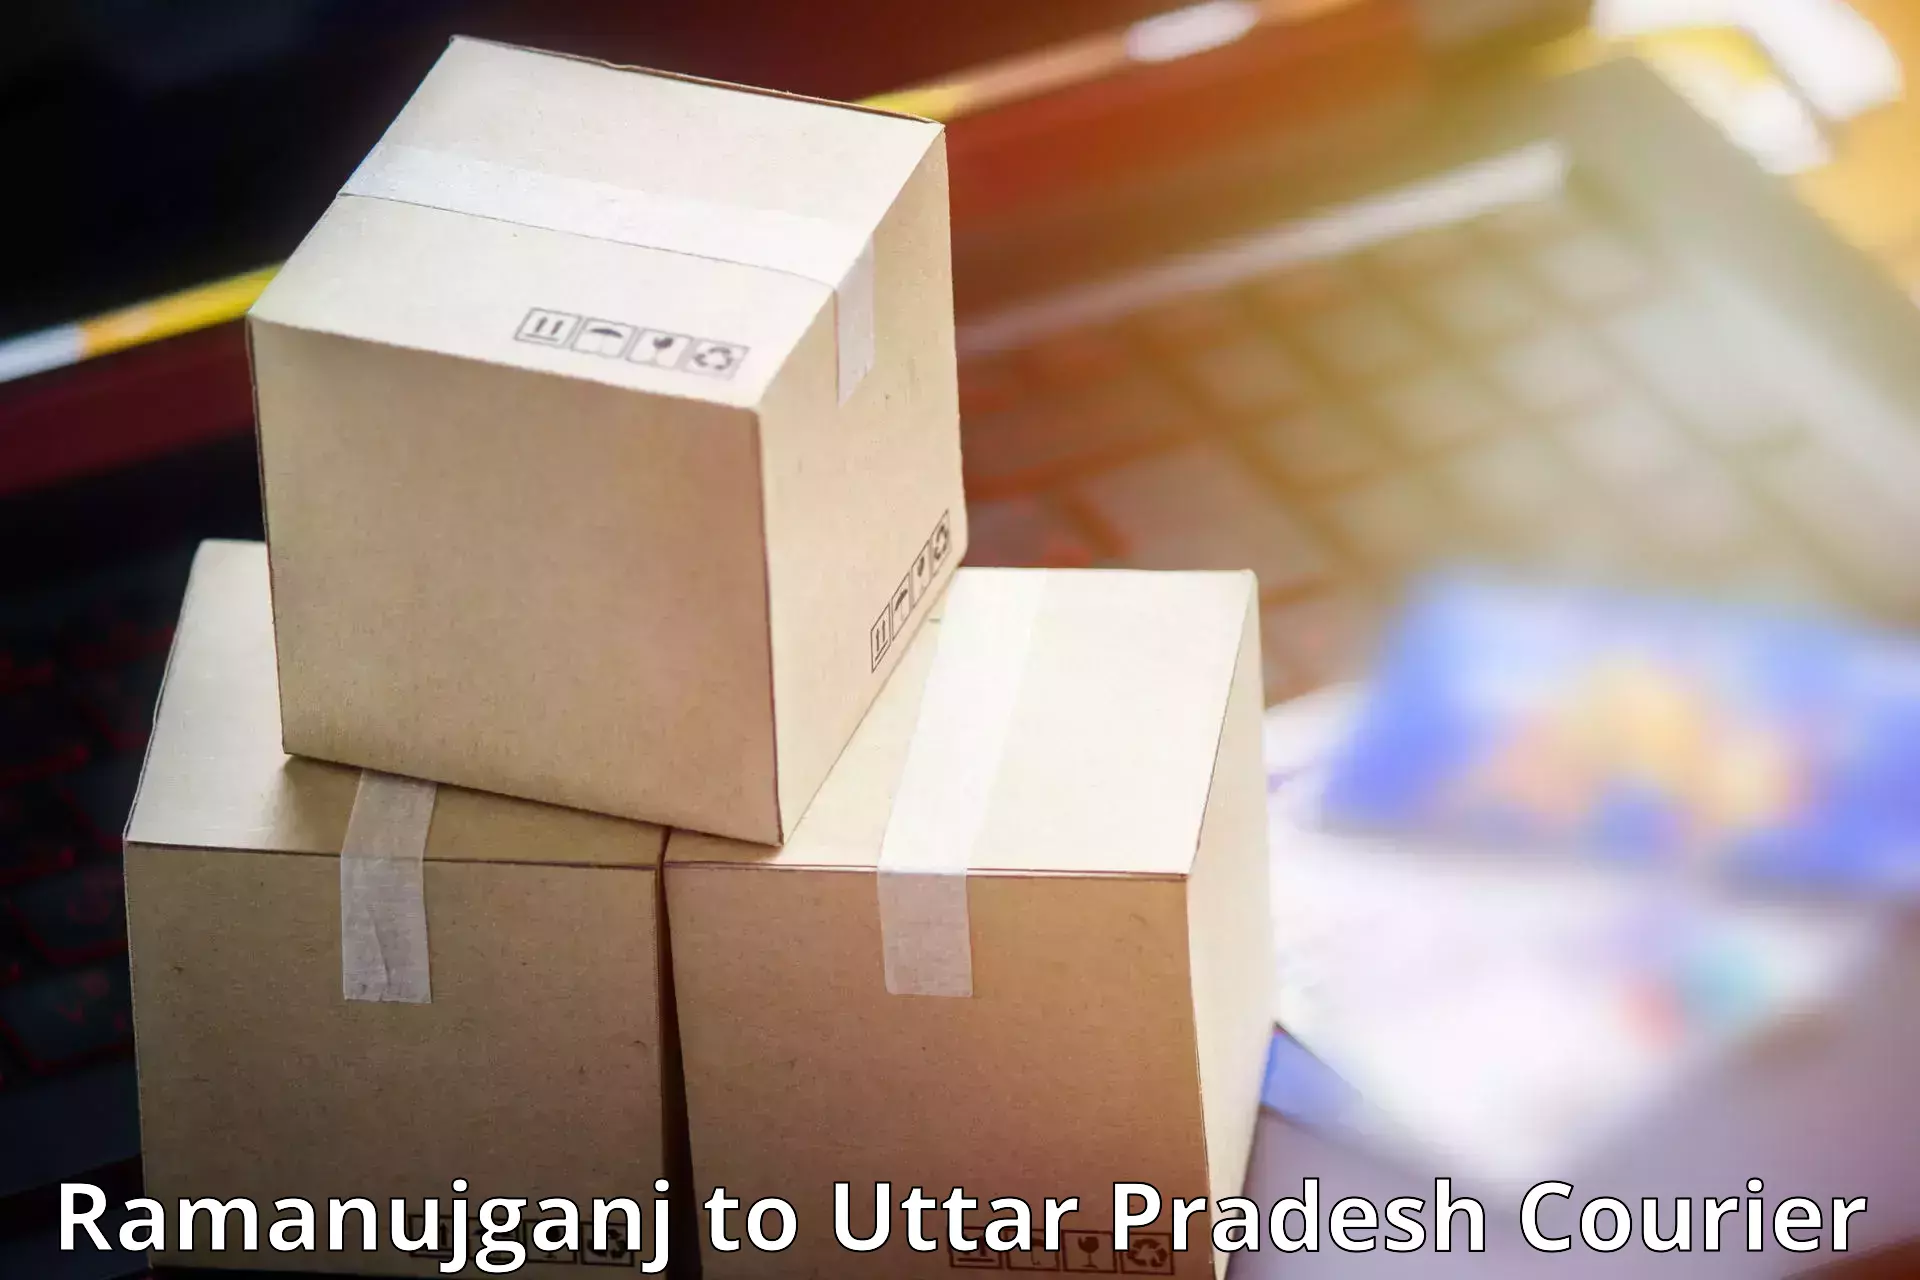 High-capacity shipping options Ramanujganj to Agra